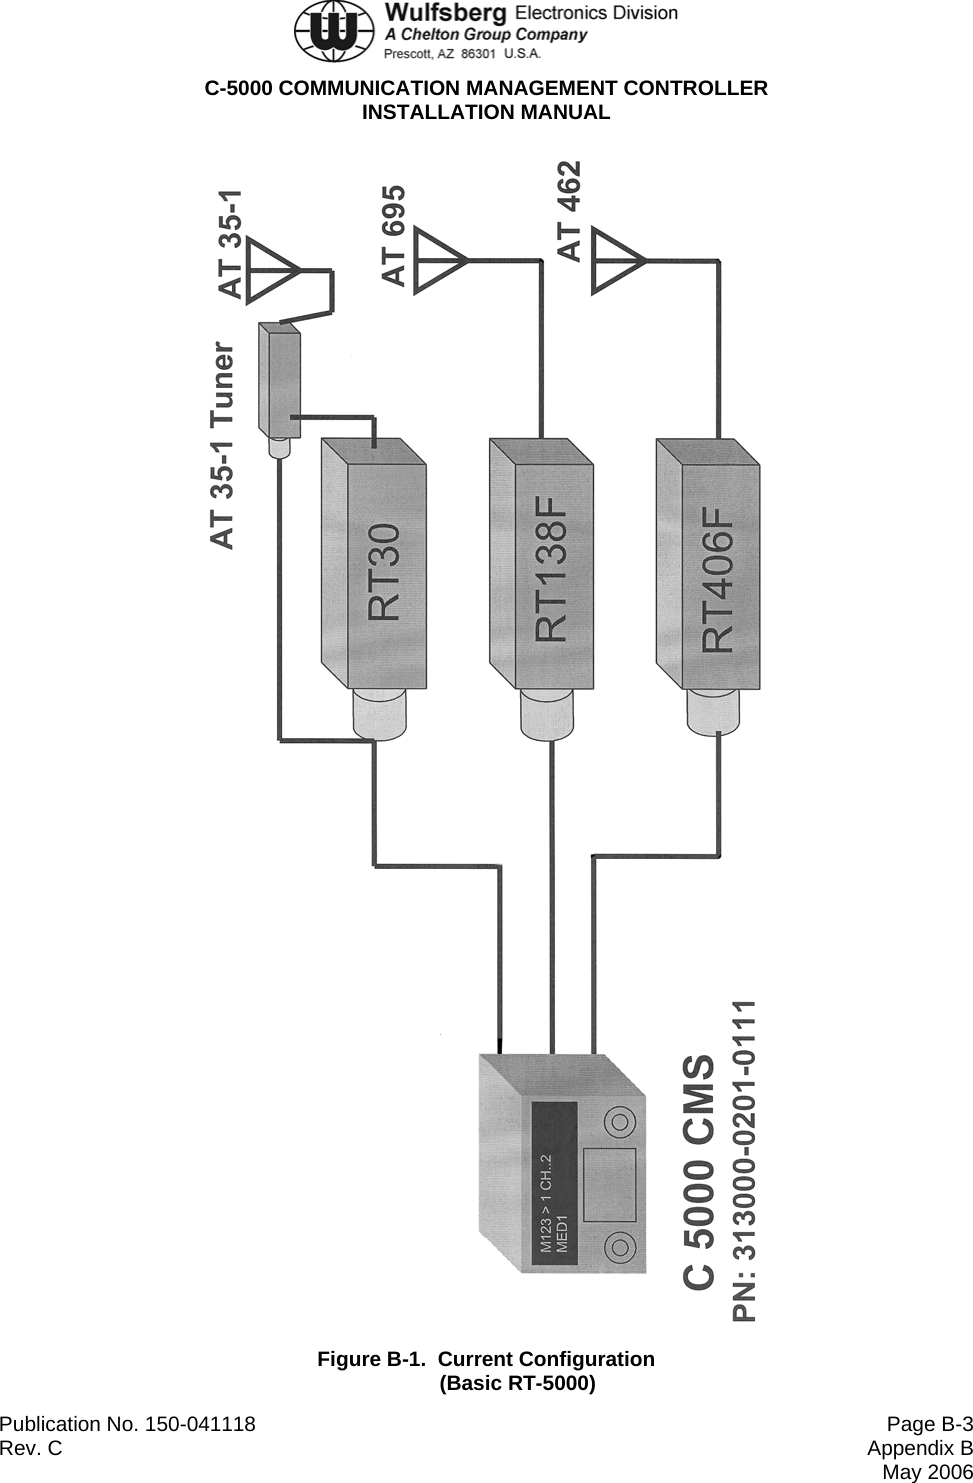  C-5000 COMMUNICATION MANAGEMENT CONTROLLER INSTALLATION MANUAL  Publication No. 150-041118  Page B-3 Rev. C  Appendix B May 2006  Figure B-1.  Current Configuration (Basic RT-5000) 